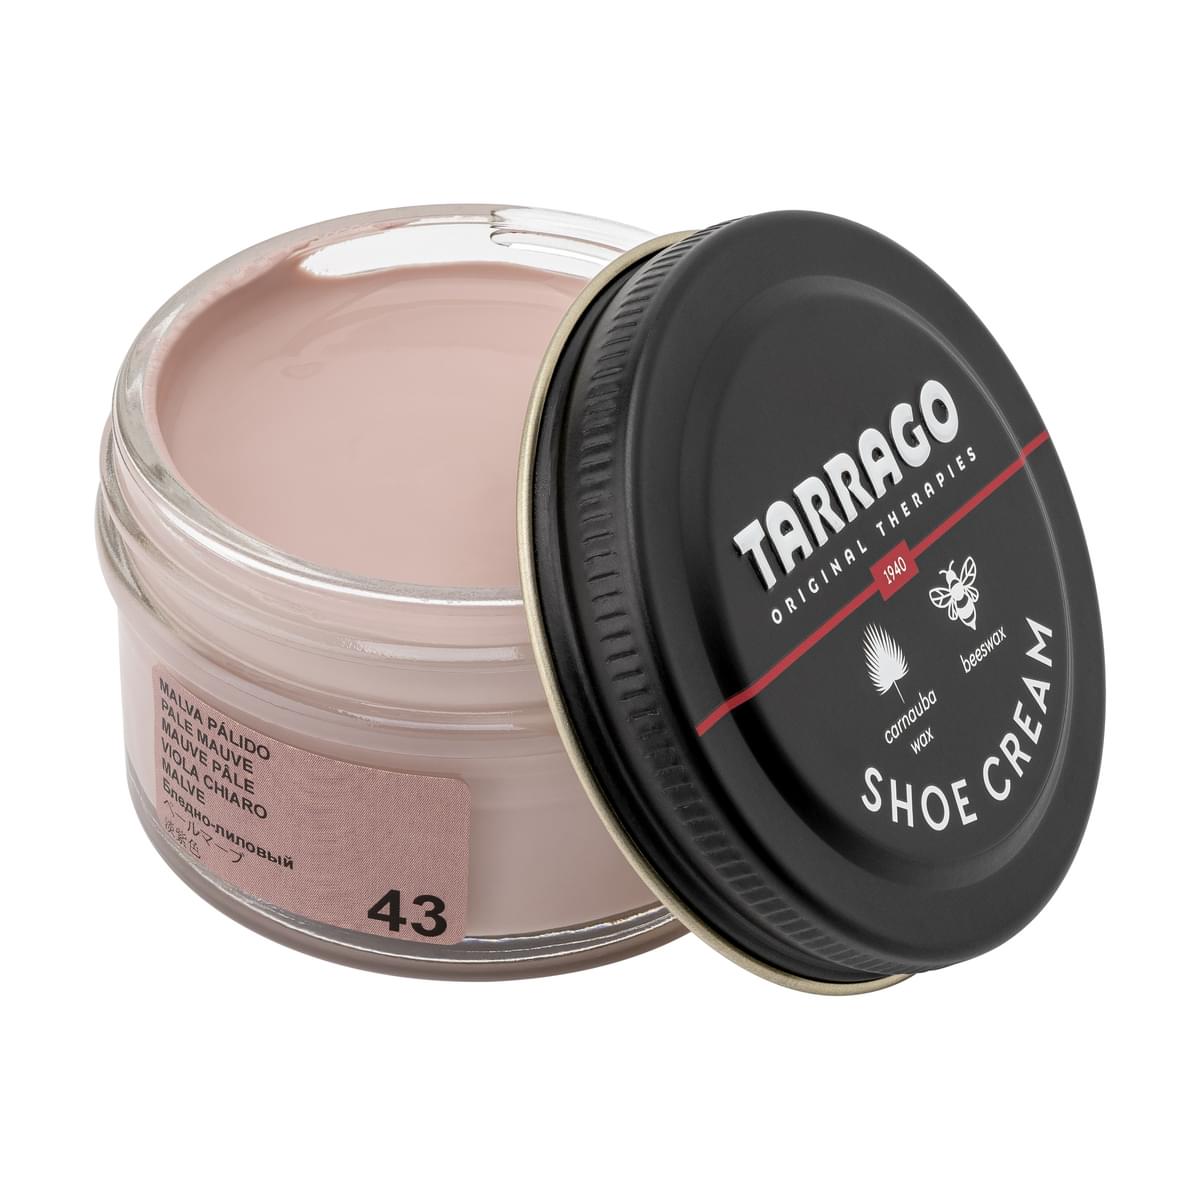 Tarrago Shoe Cream  - Pale Mauve - 43